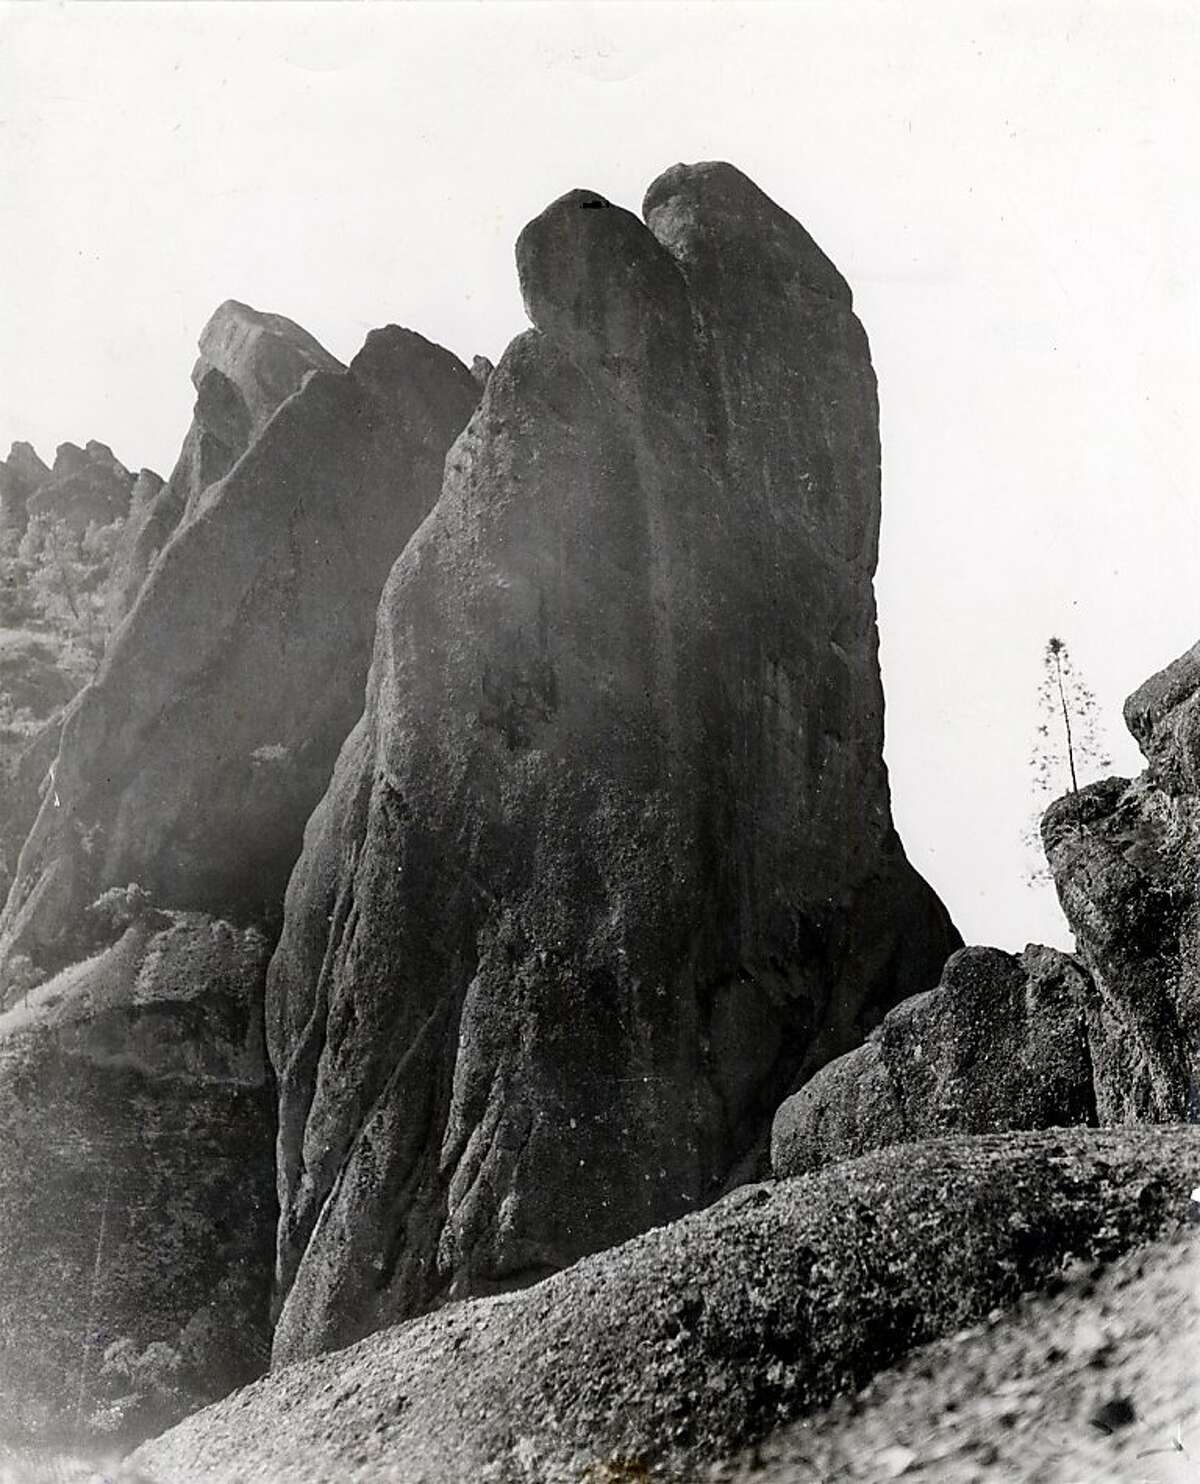 PINNACLES-C-13DEC99-MN-HO--Pinnacles National Monument in San Benito County.